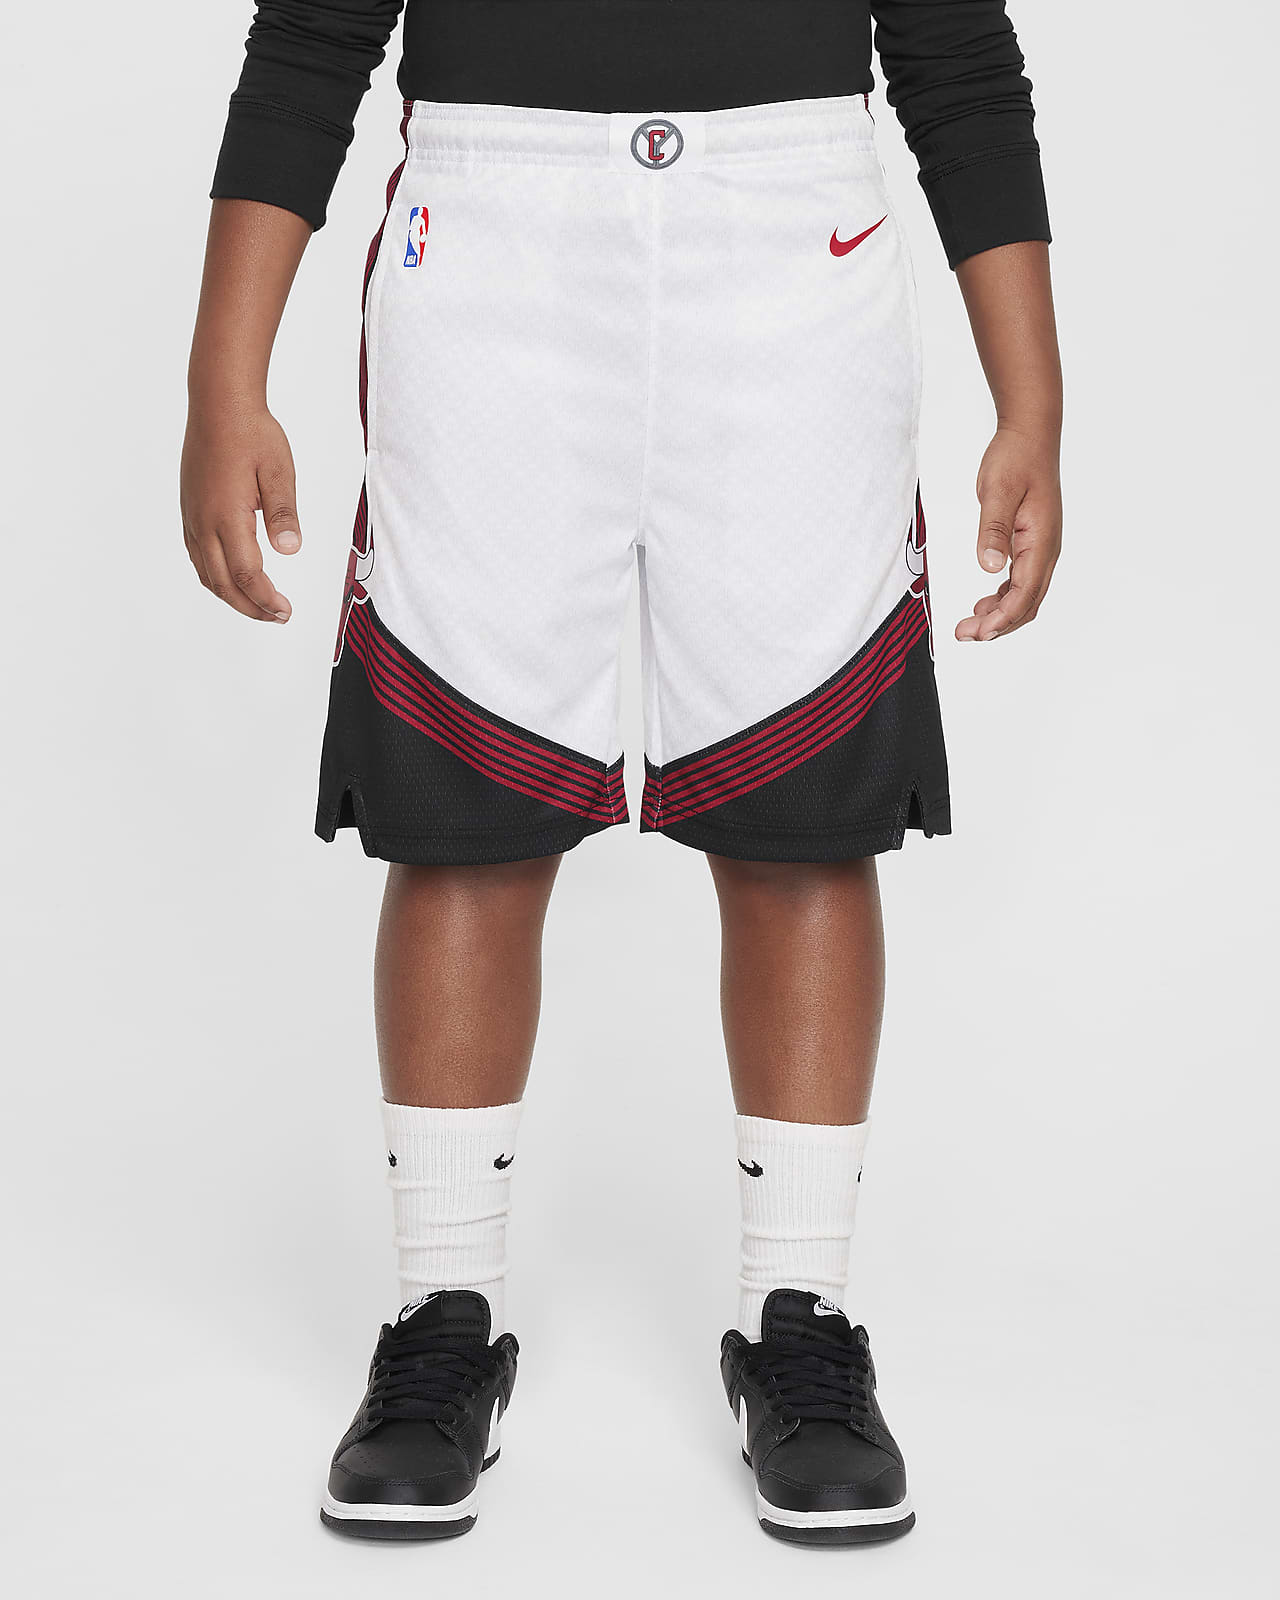 Chicago Bulls Pantalons curts Nike Dri-FIT NBA Swingman - Nen/a